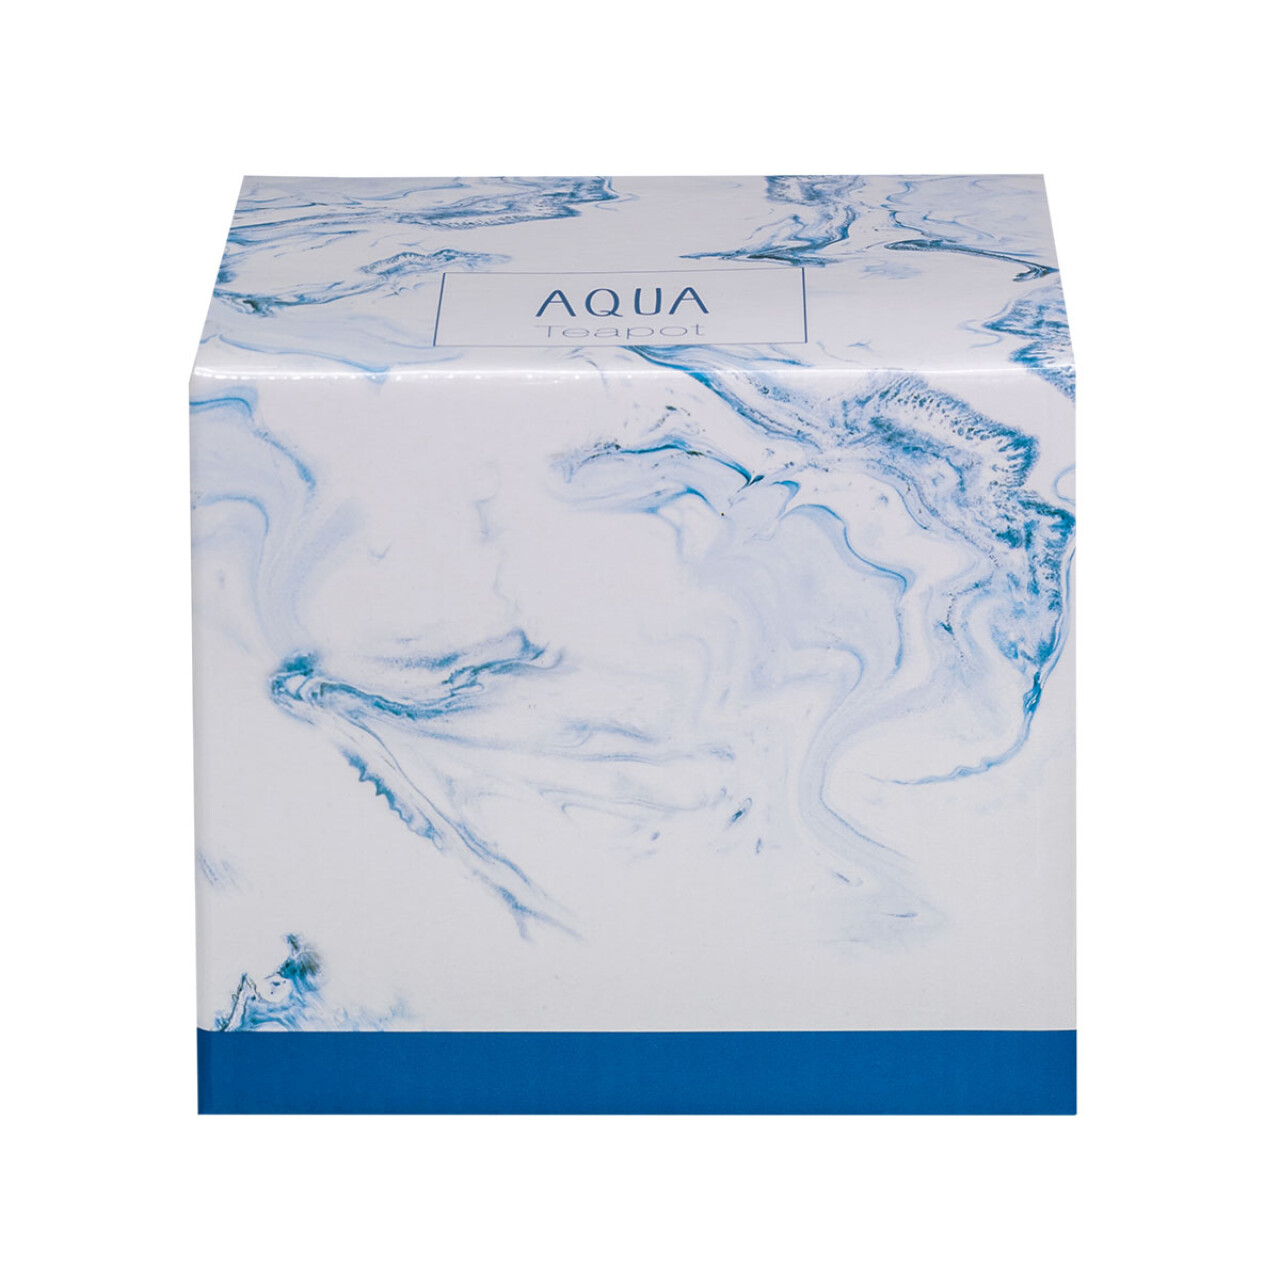 Aqua, Kanne 0,75l